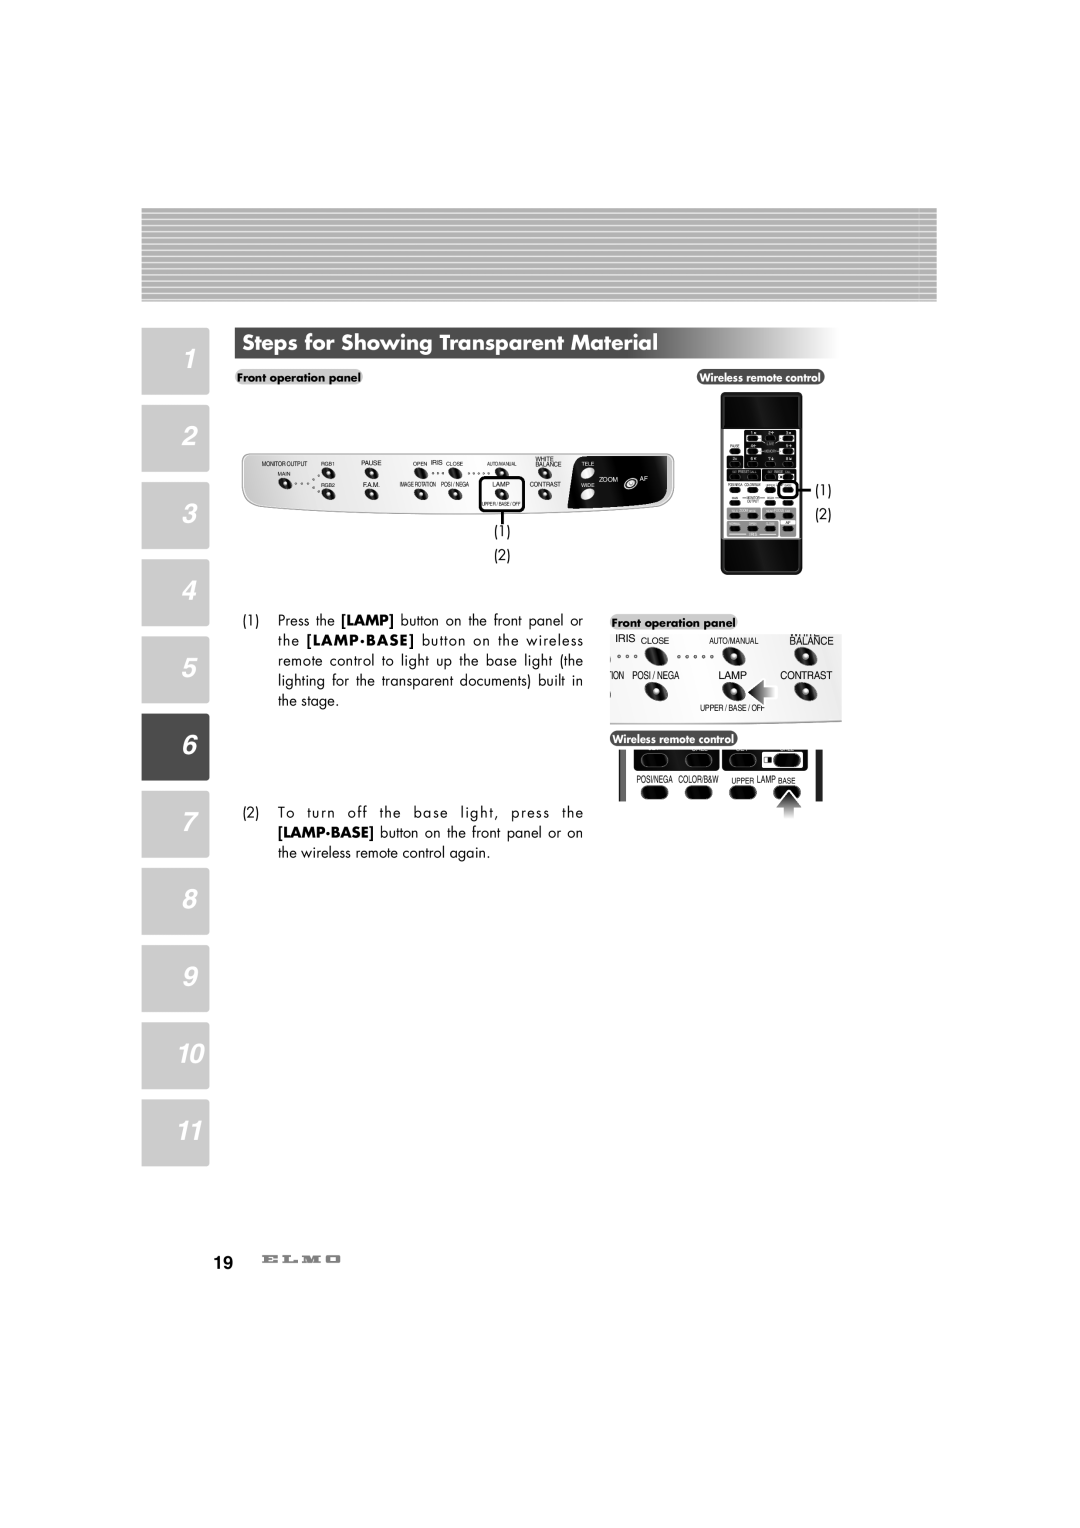 Elmo HV-7100SX instruction manual Steps for Showing Transparent Material, Call 